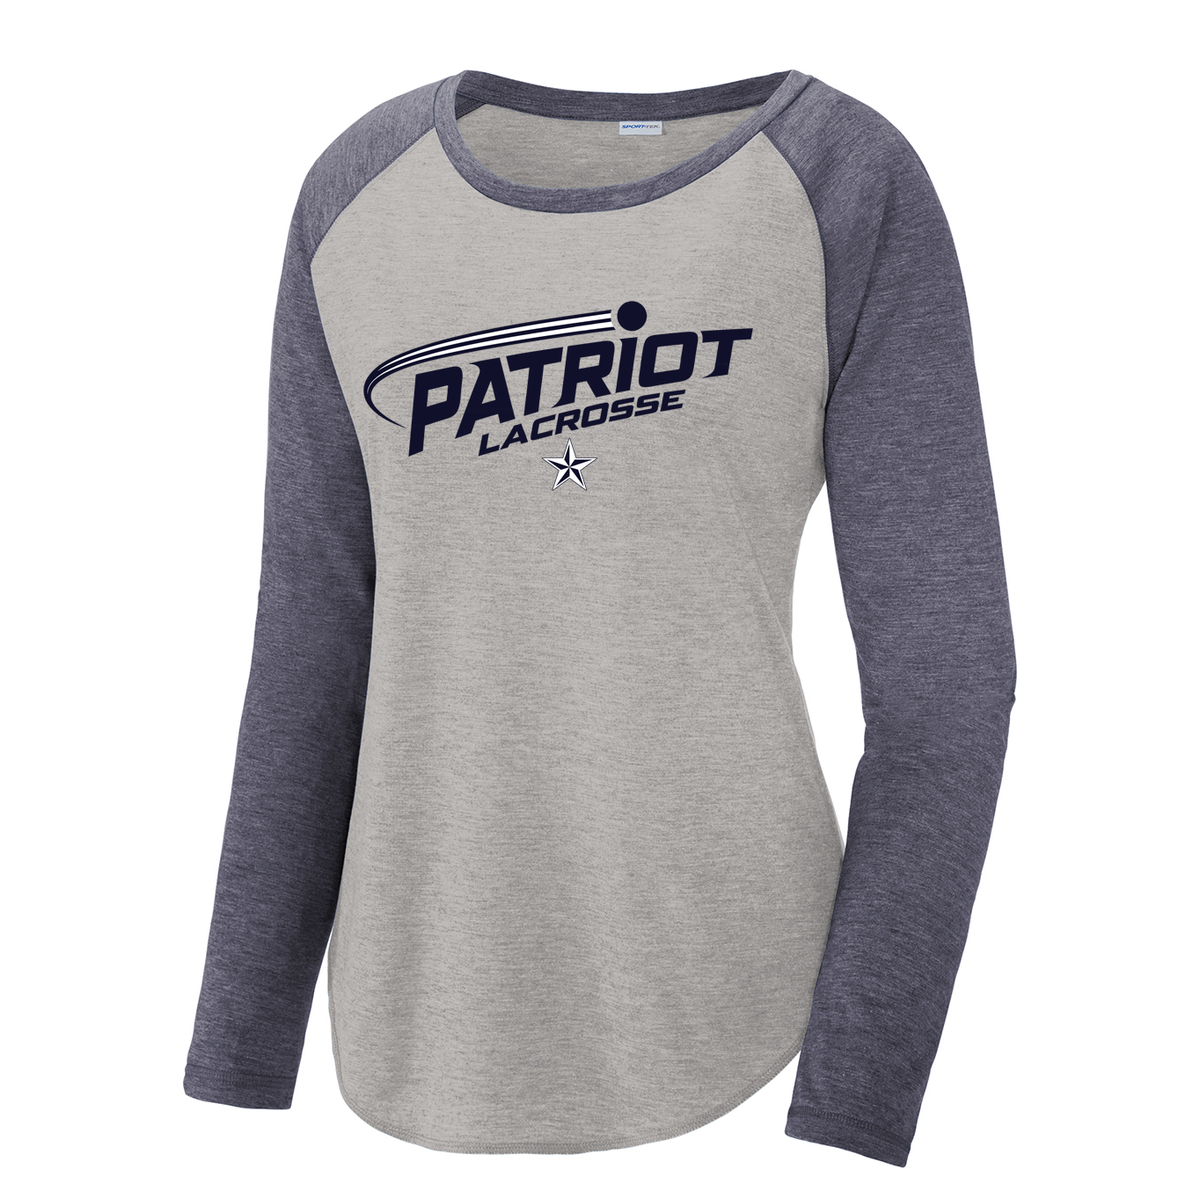 Patriot Lacrosse Women's Raglan Long Sleeve CottonTouch